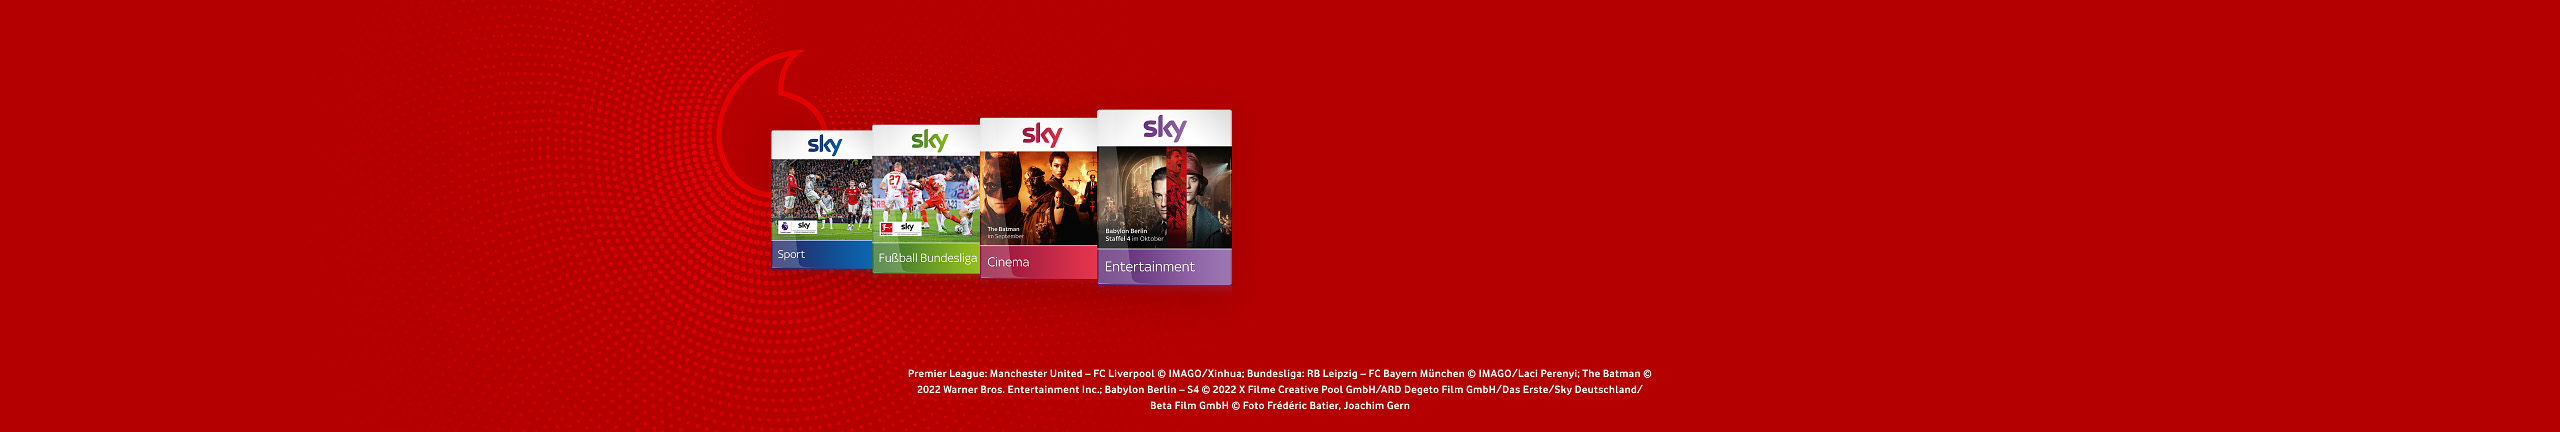 Sky Pakete bei Vodafone: Sky Cinema Paket, Sky Fußball-Bundesliga Paket, Sky Sport Paket, Sky Kids Paket